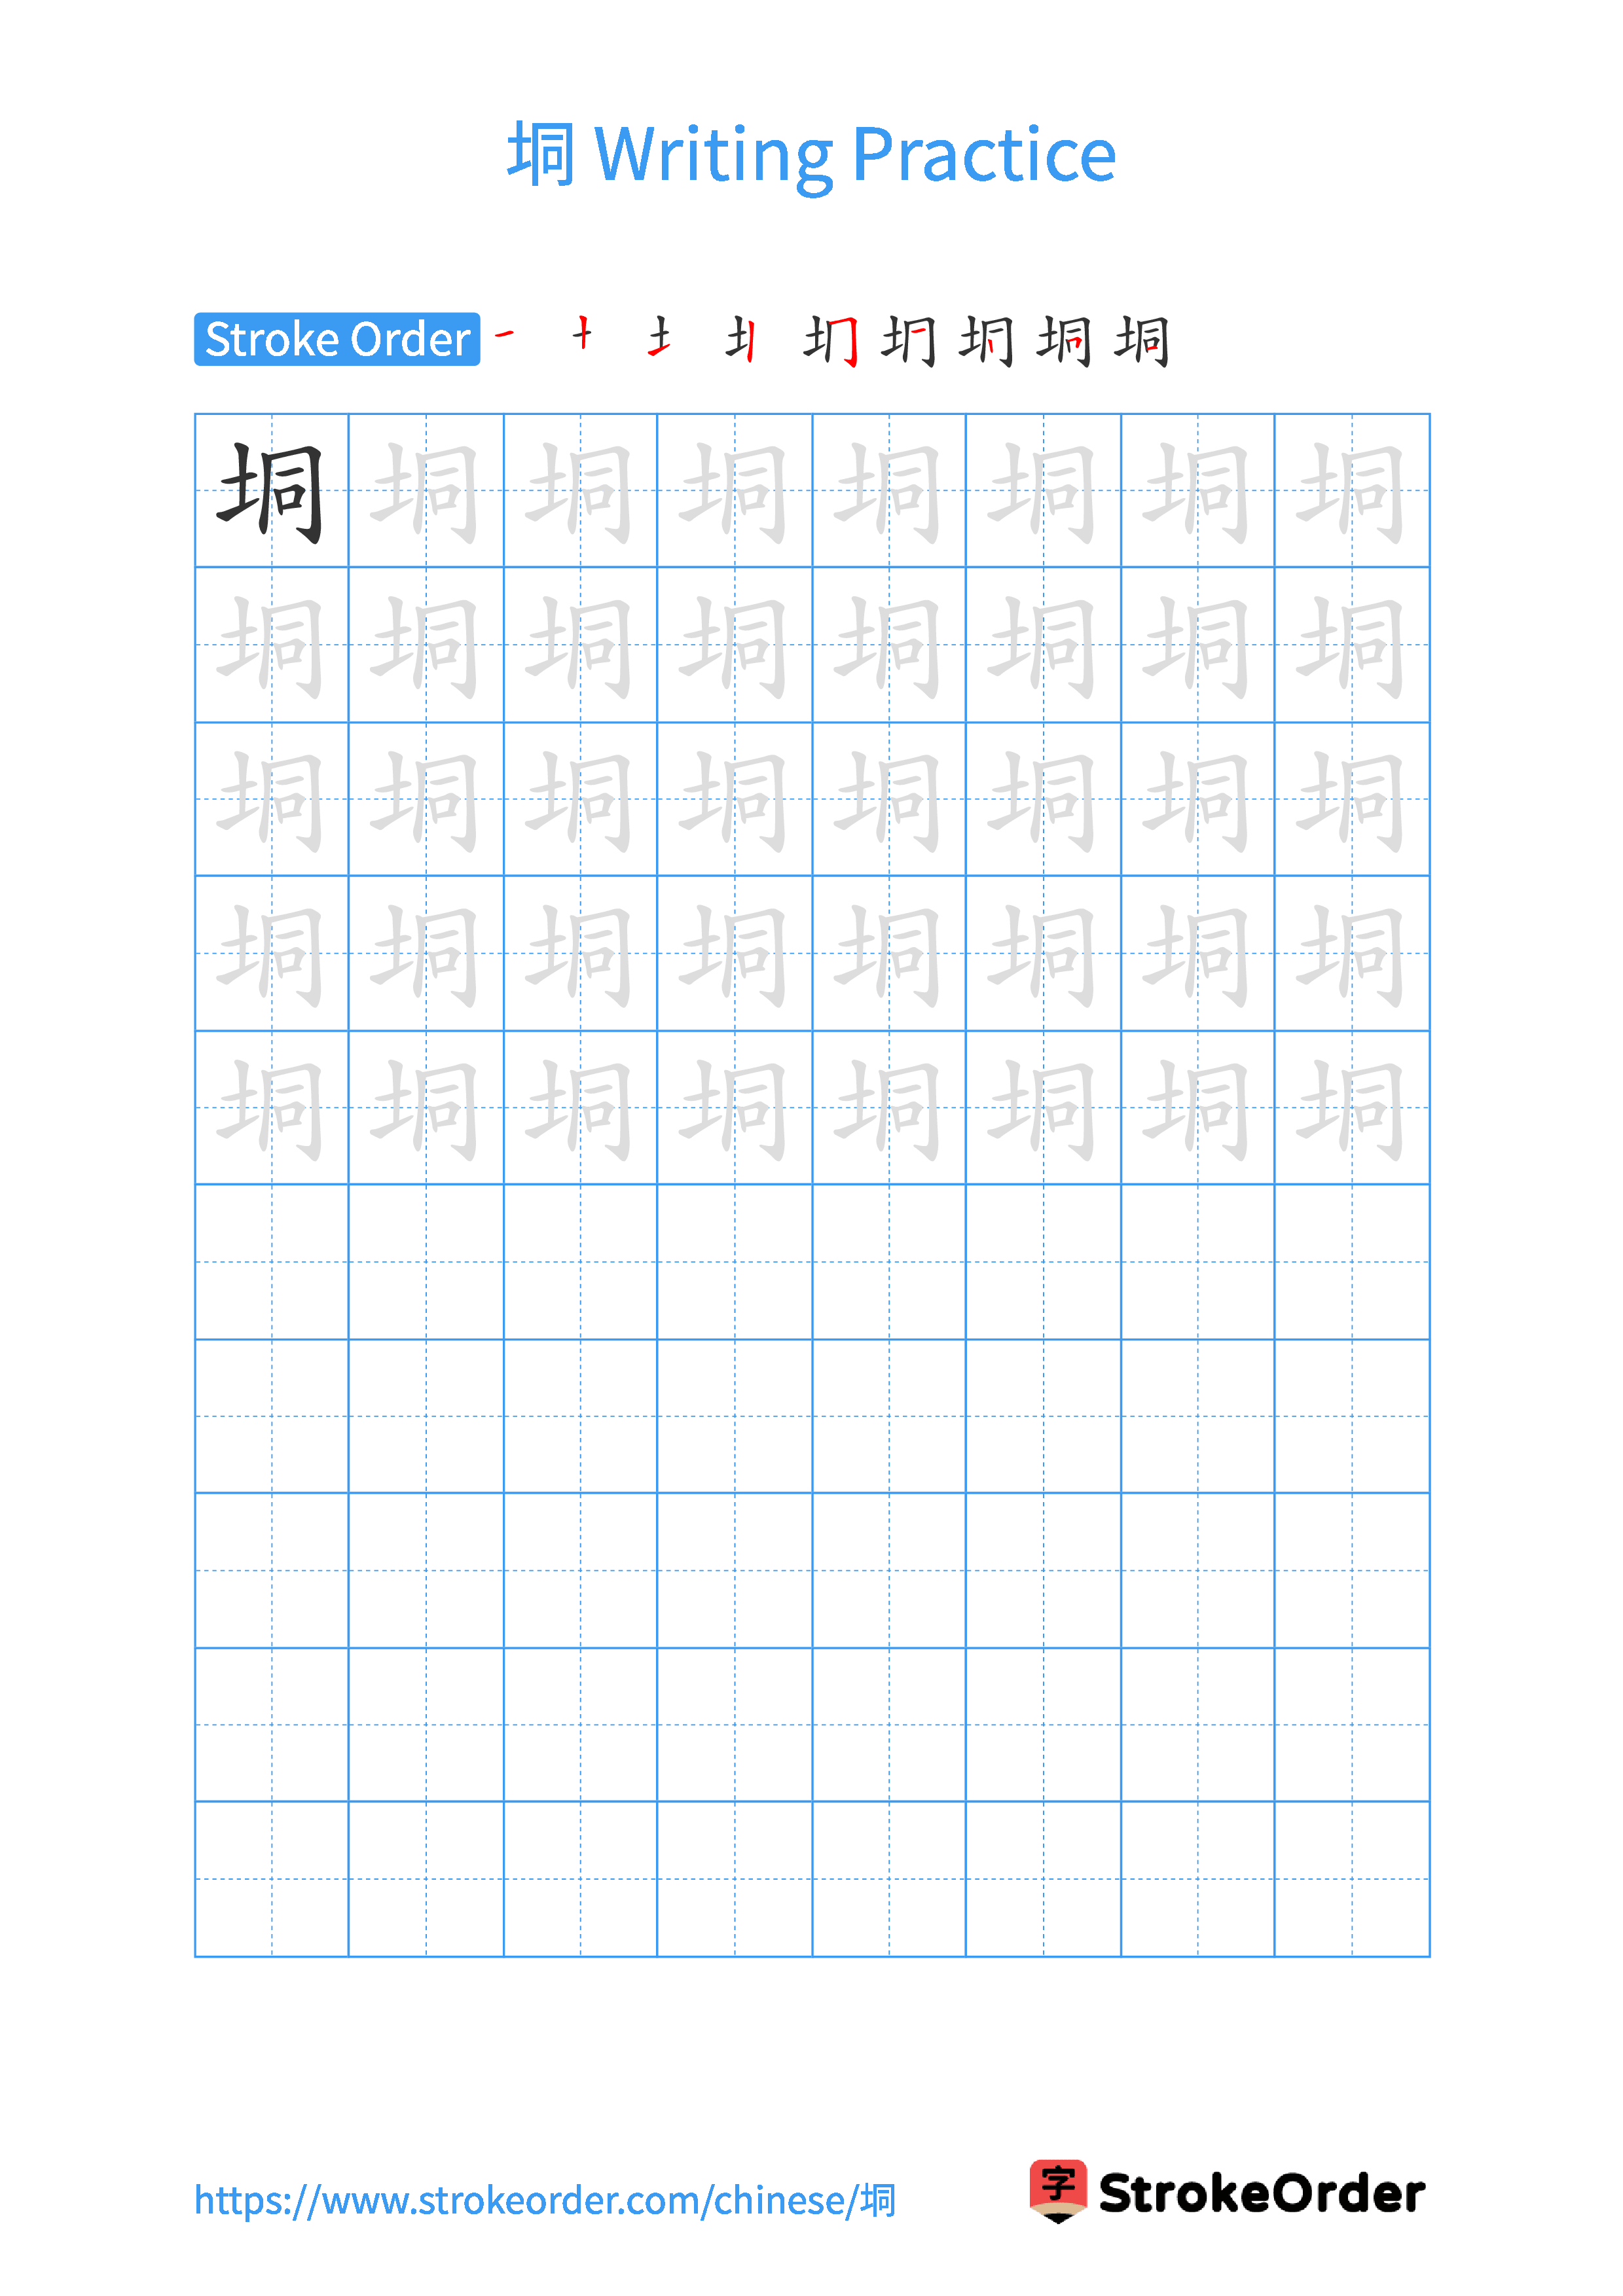 Printable Handwriting Practice Worksheet of the Chinese character 垌 in Portrait Orientation (Tian Zi Ge)